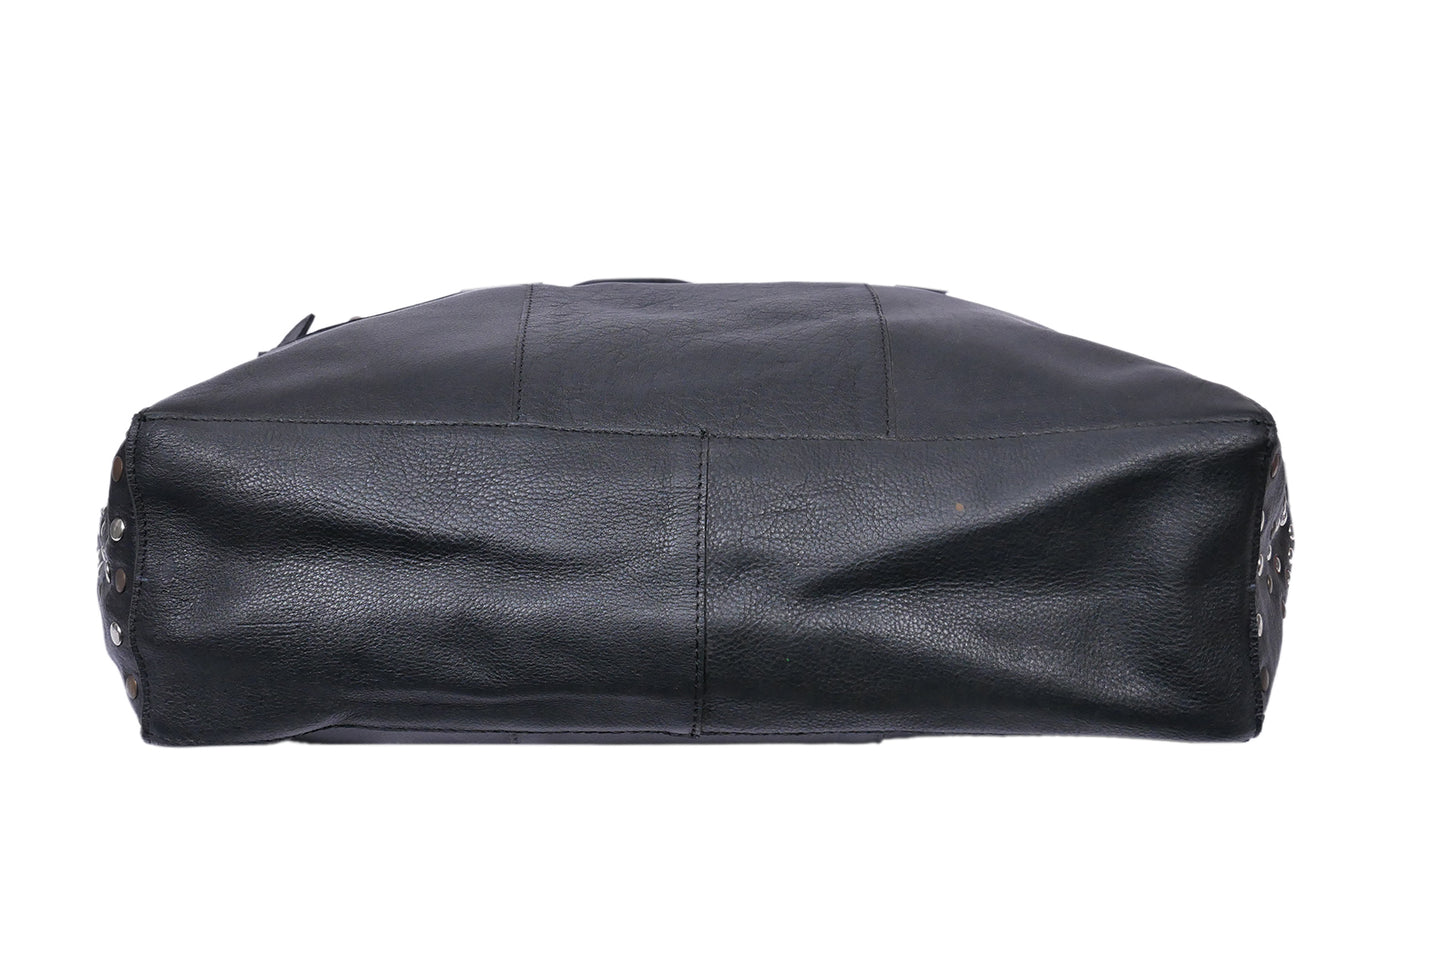 Elegance Redefined: Introducing the Black Leather Shoulder Bag with Ri ...